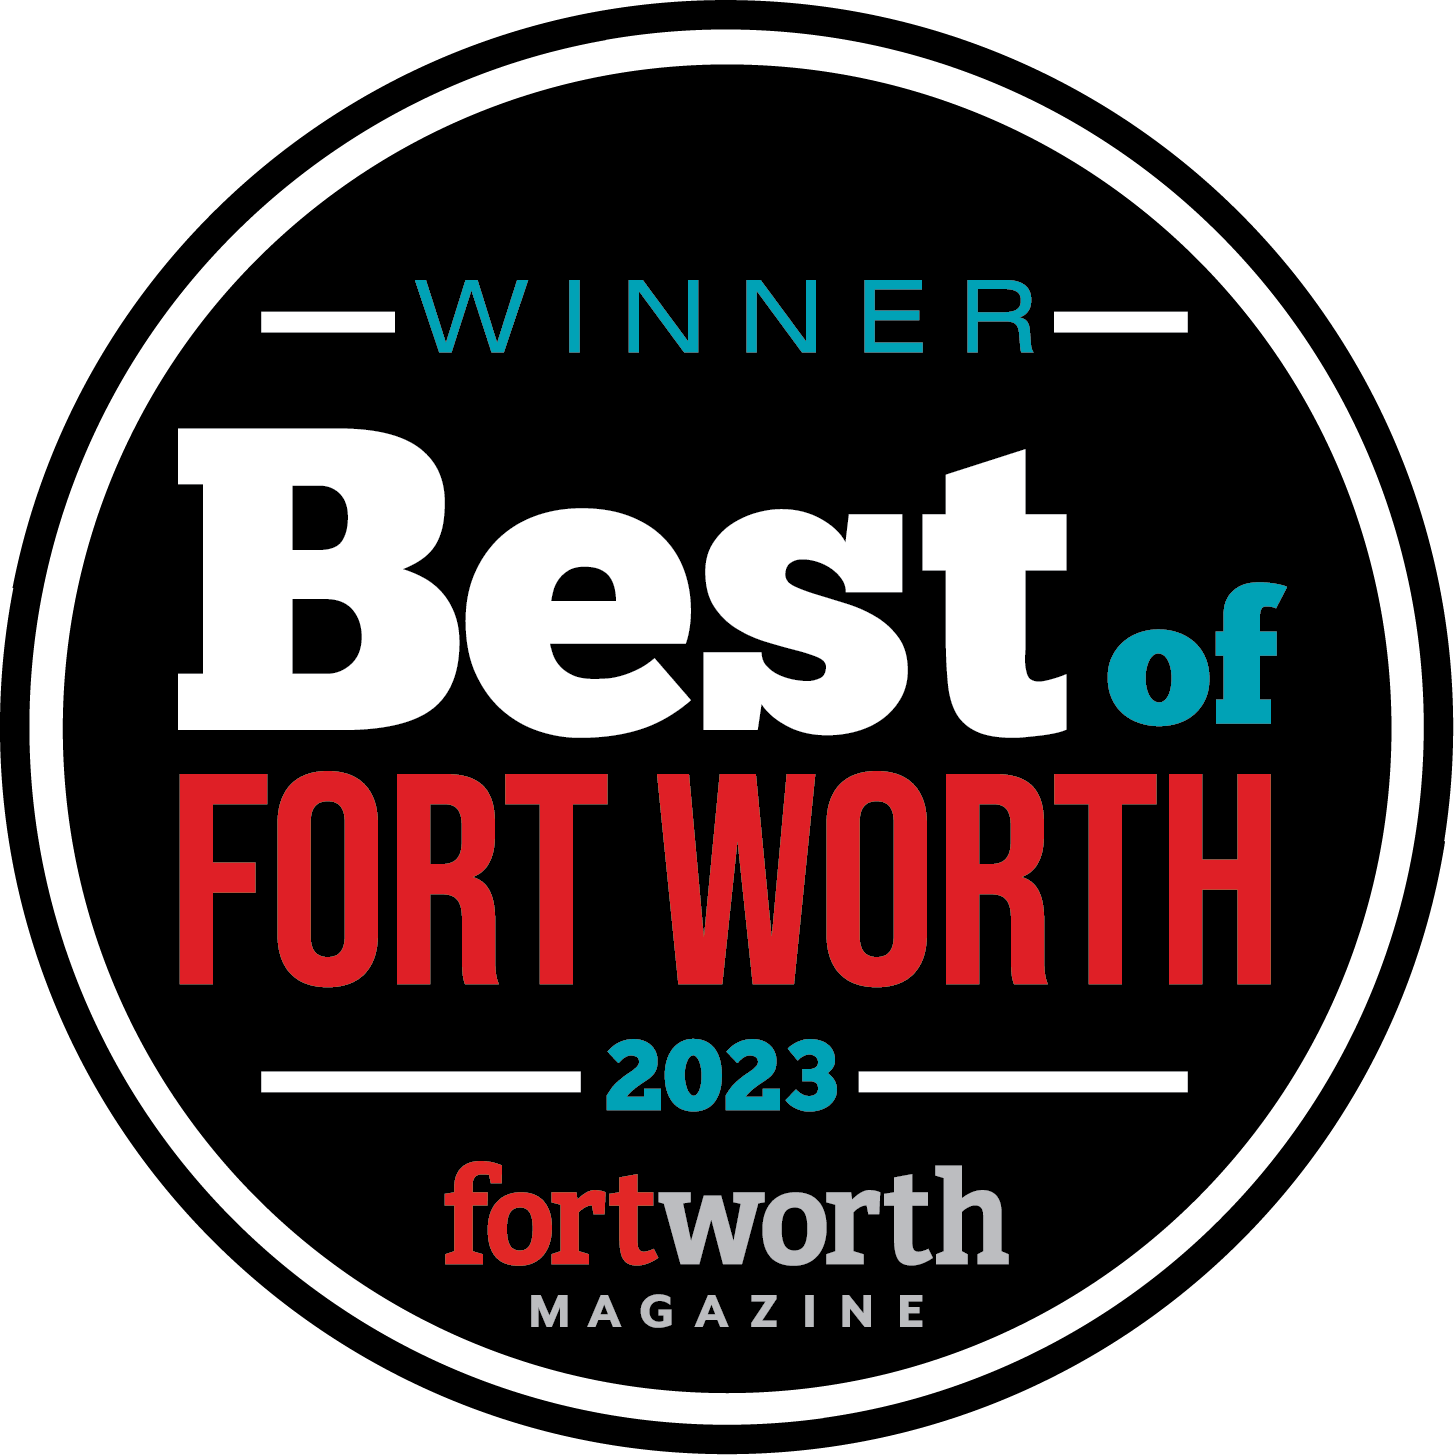 Winner Best of Fort Worth 2023 - Fortworth Magazine